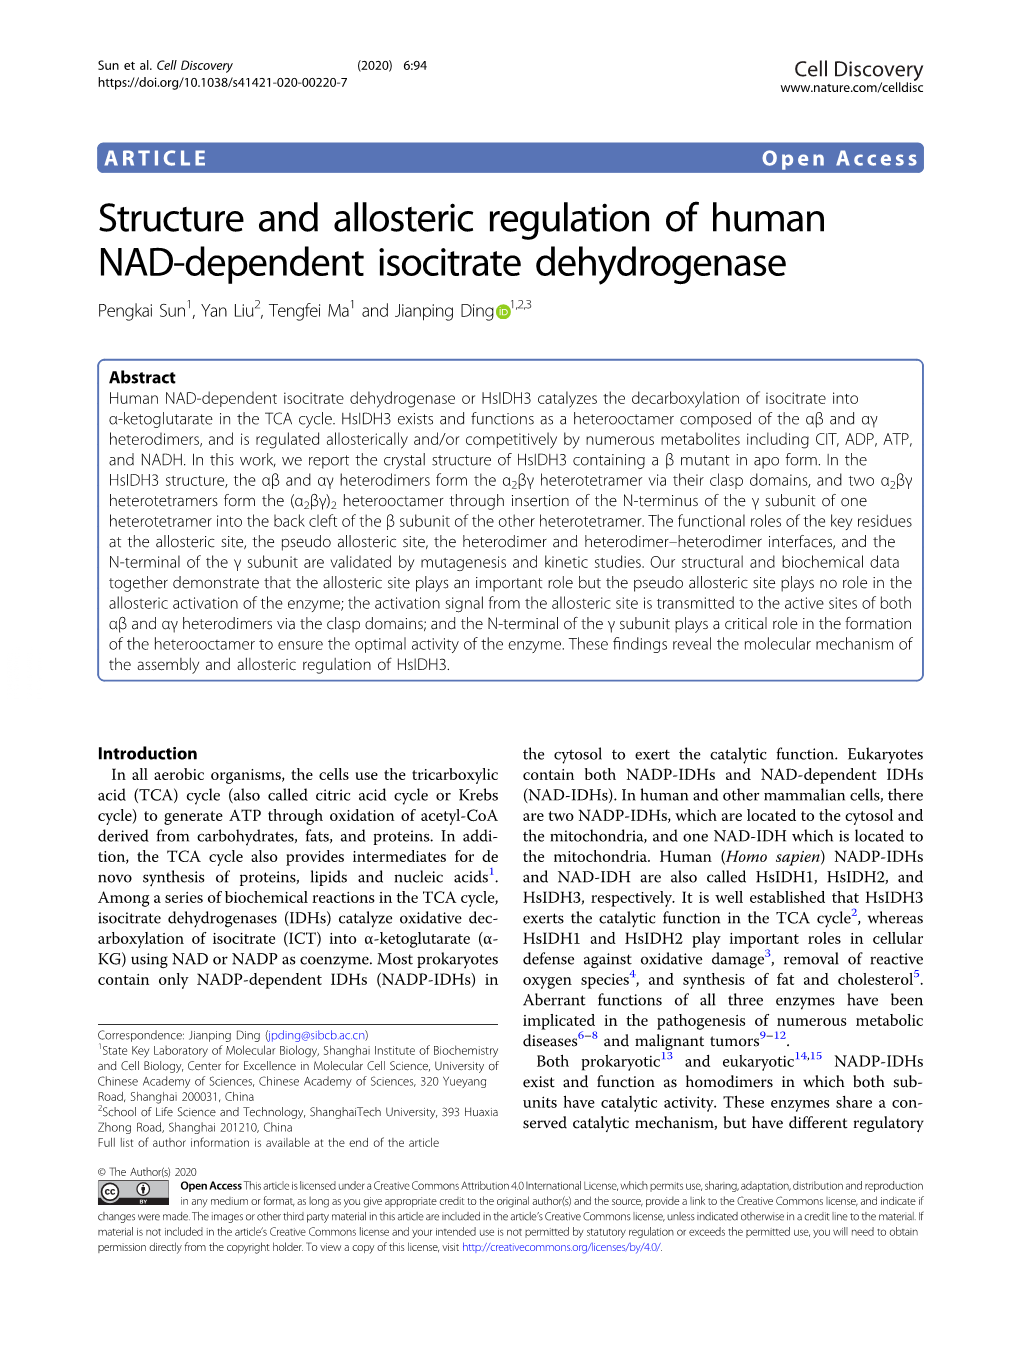 Structure and Allosteric Regulation of Human NAD-Dependent Isocitrate Dehydrogenase Pengkai Sun1, Yan Liu2, Tengfei Ma1 and Jianping Ding 1,2,3